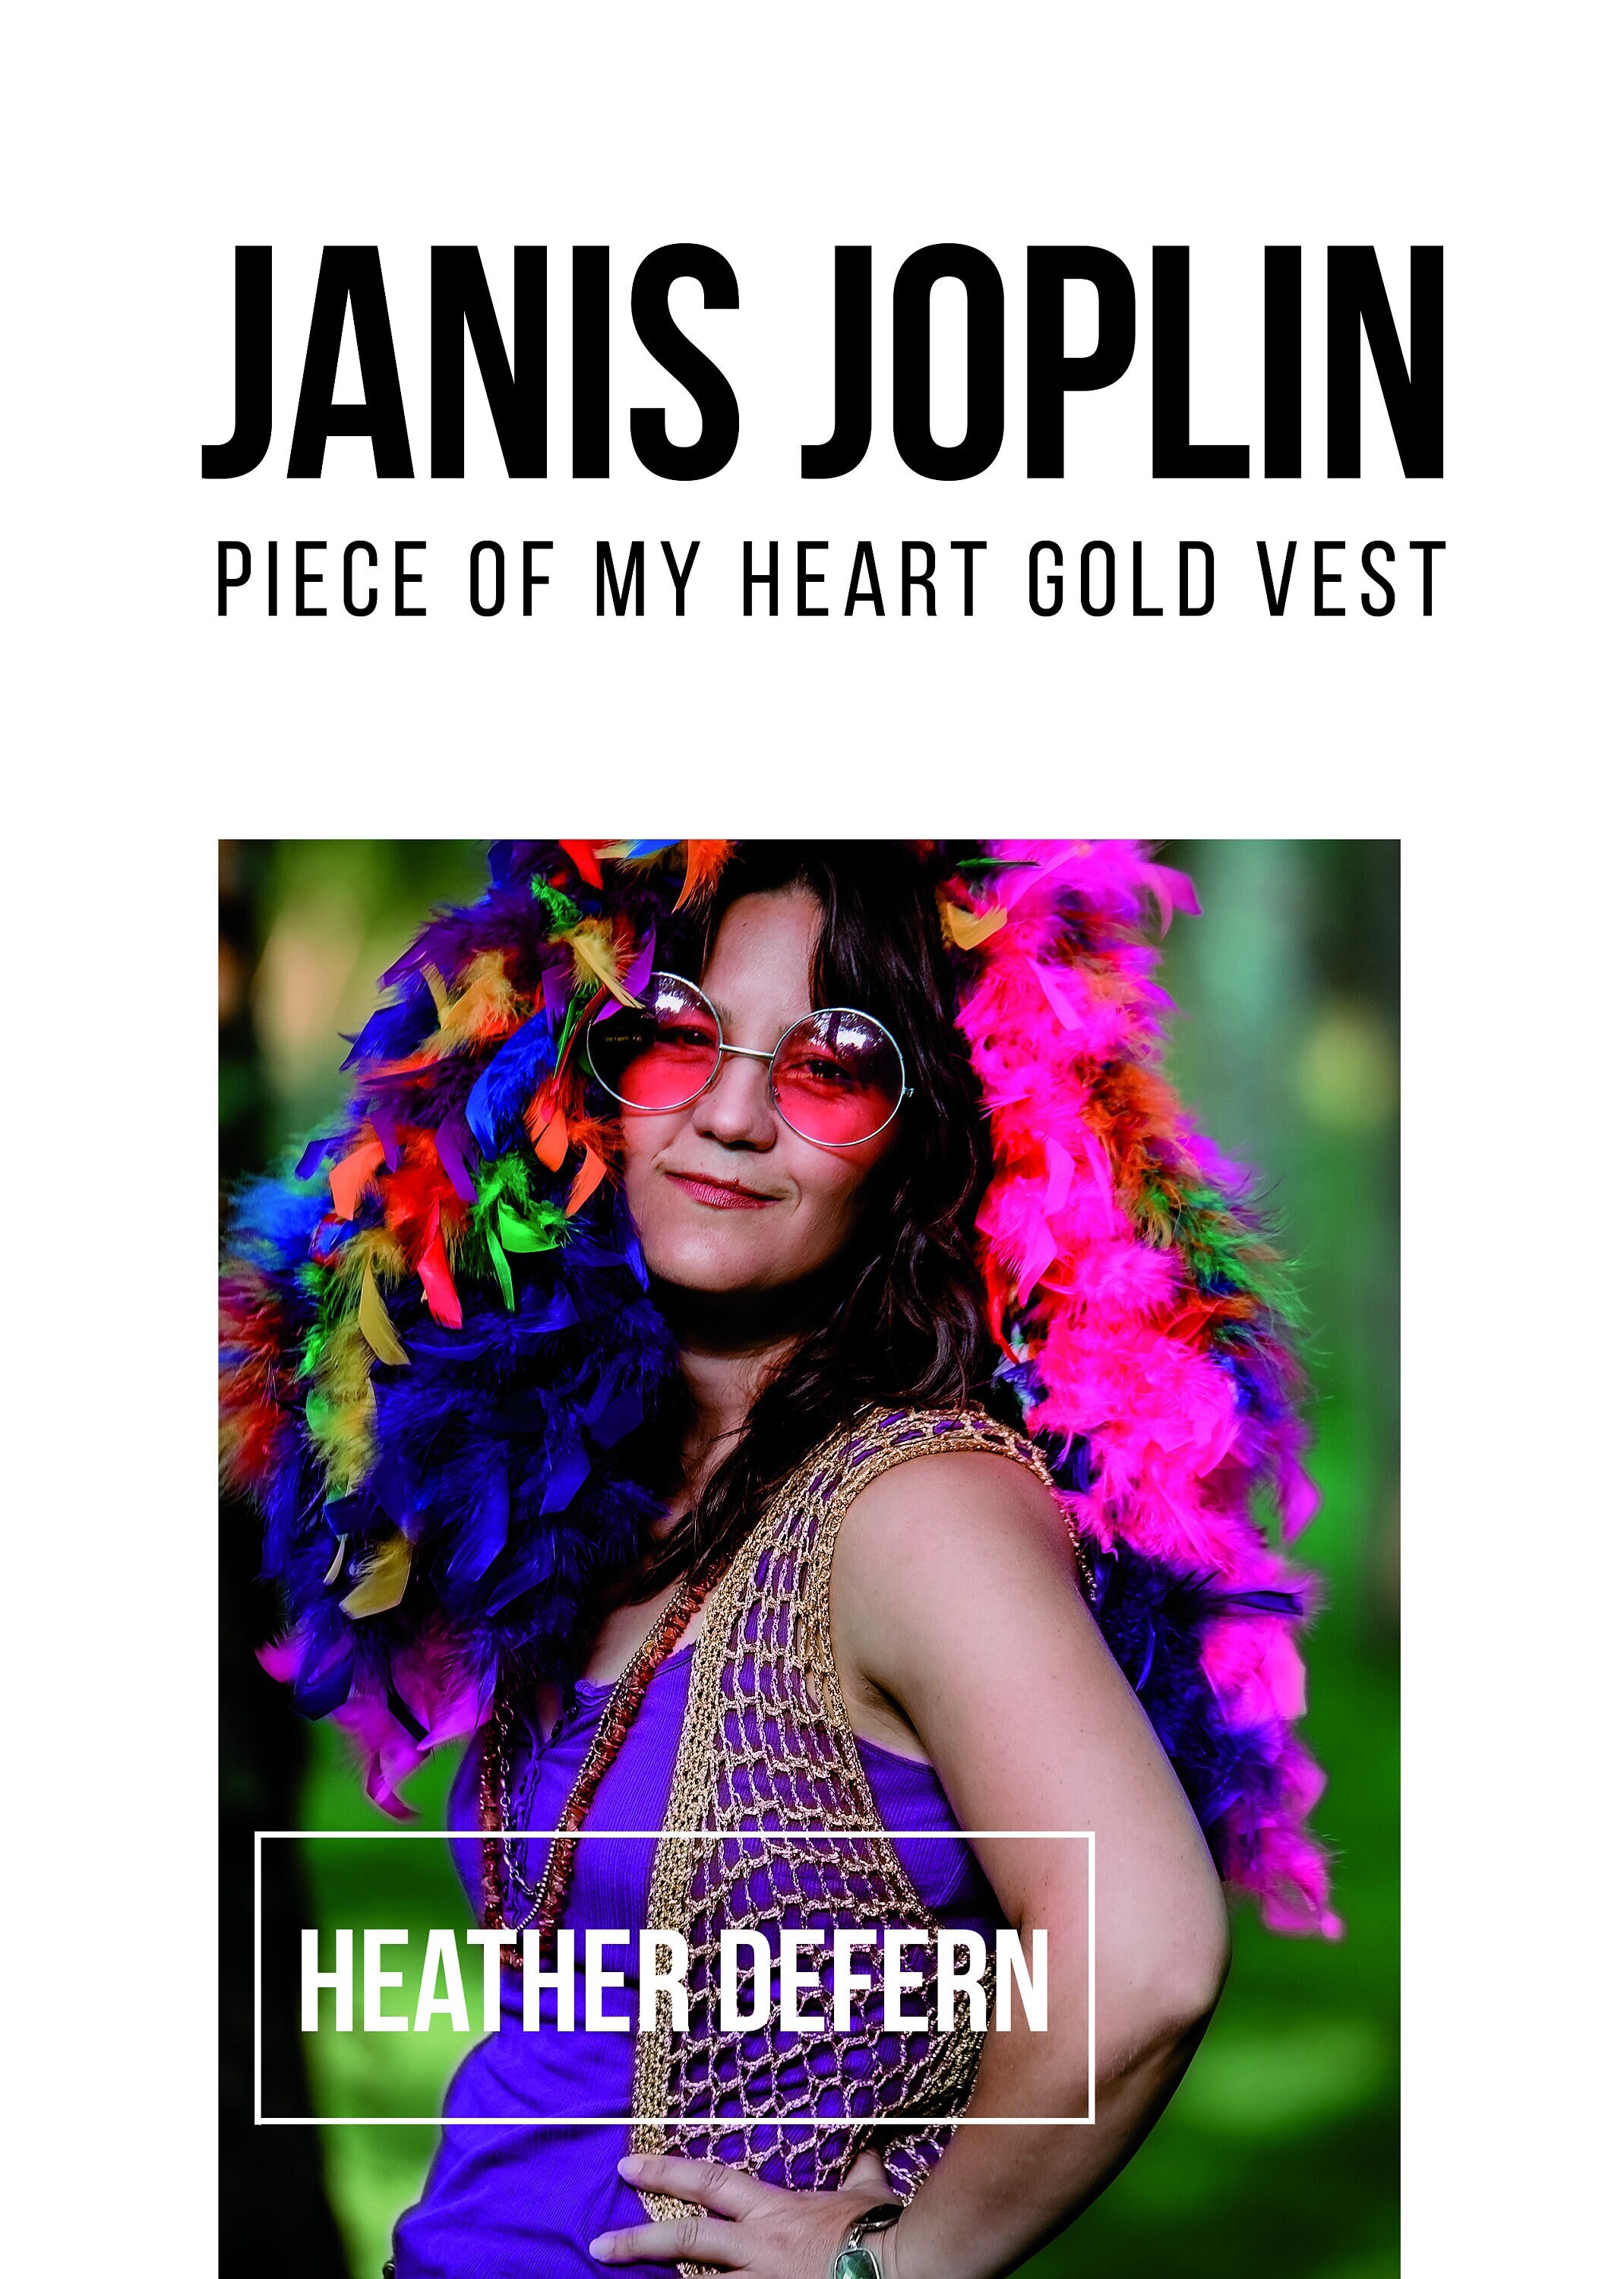 Janis Joplin - Piece of My Heart Lyrics 